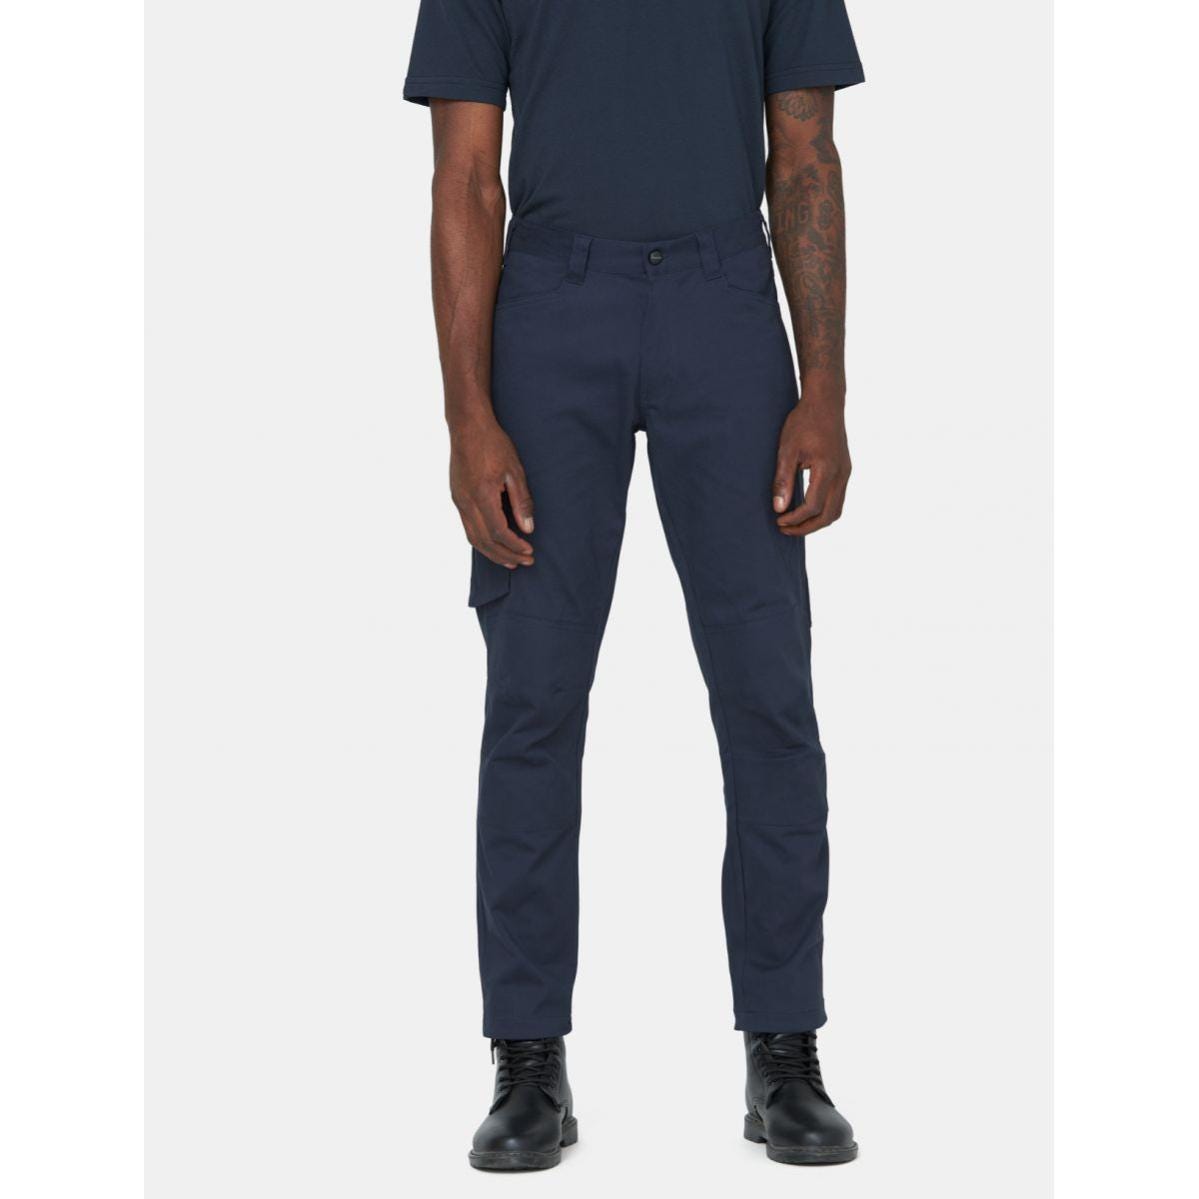 Pantalon Lead In Flex Bleu marine - Dickies - Taille 44 0